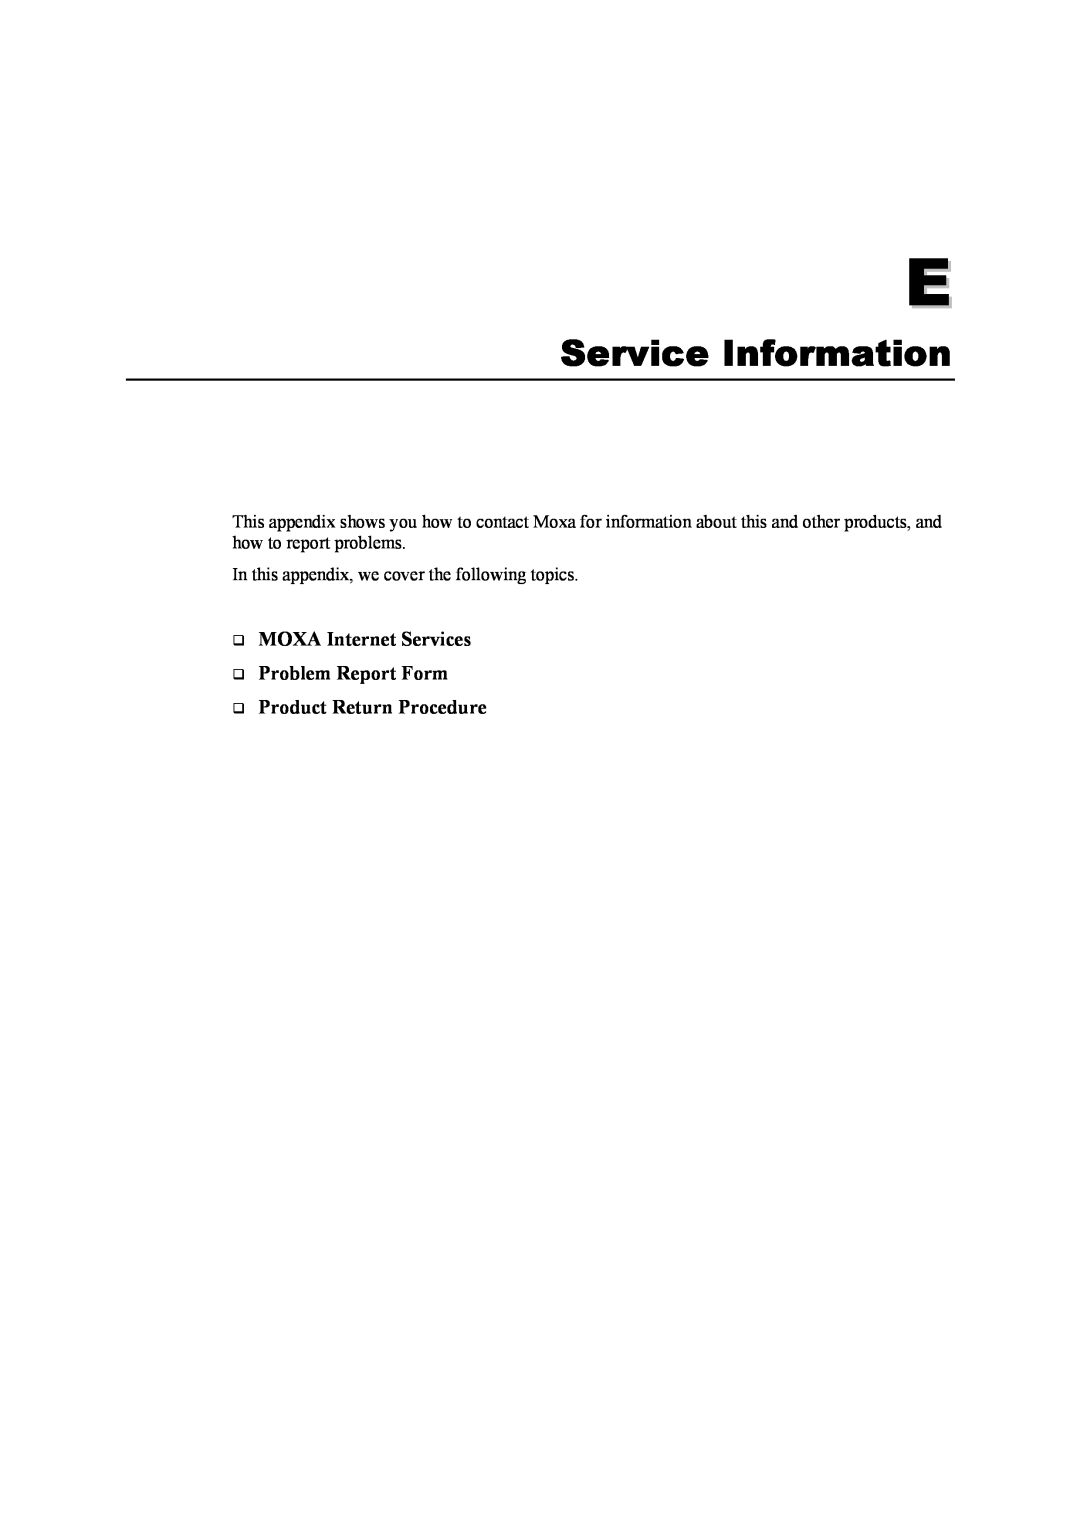 Moxa Technologies 5600 Service Information, ‰ MOXA Internet Services ‰ Problem Report Form, ‰ Product Return Procedure 